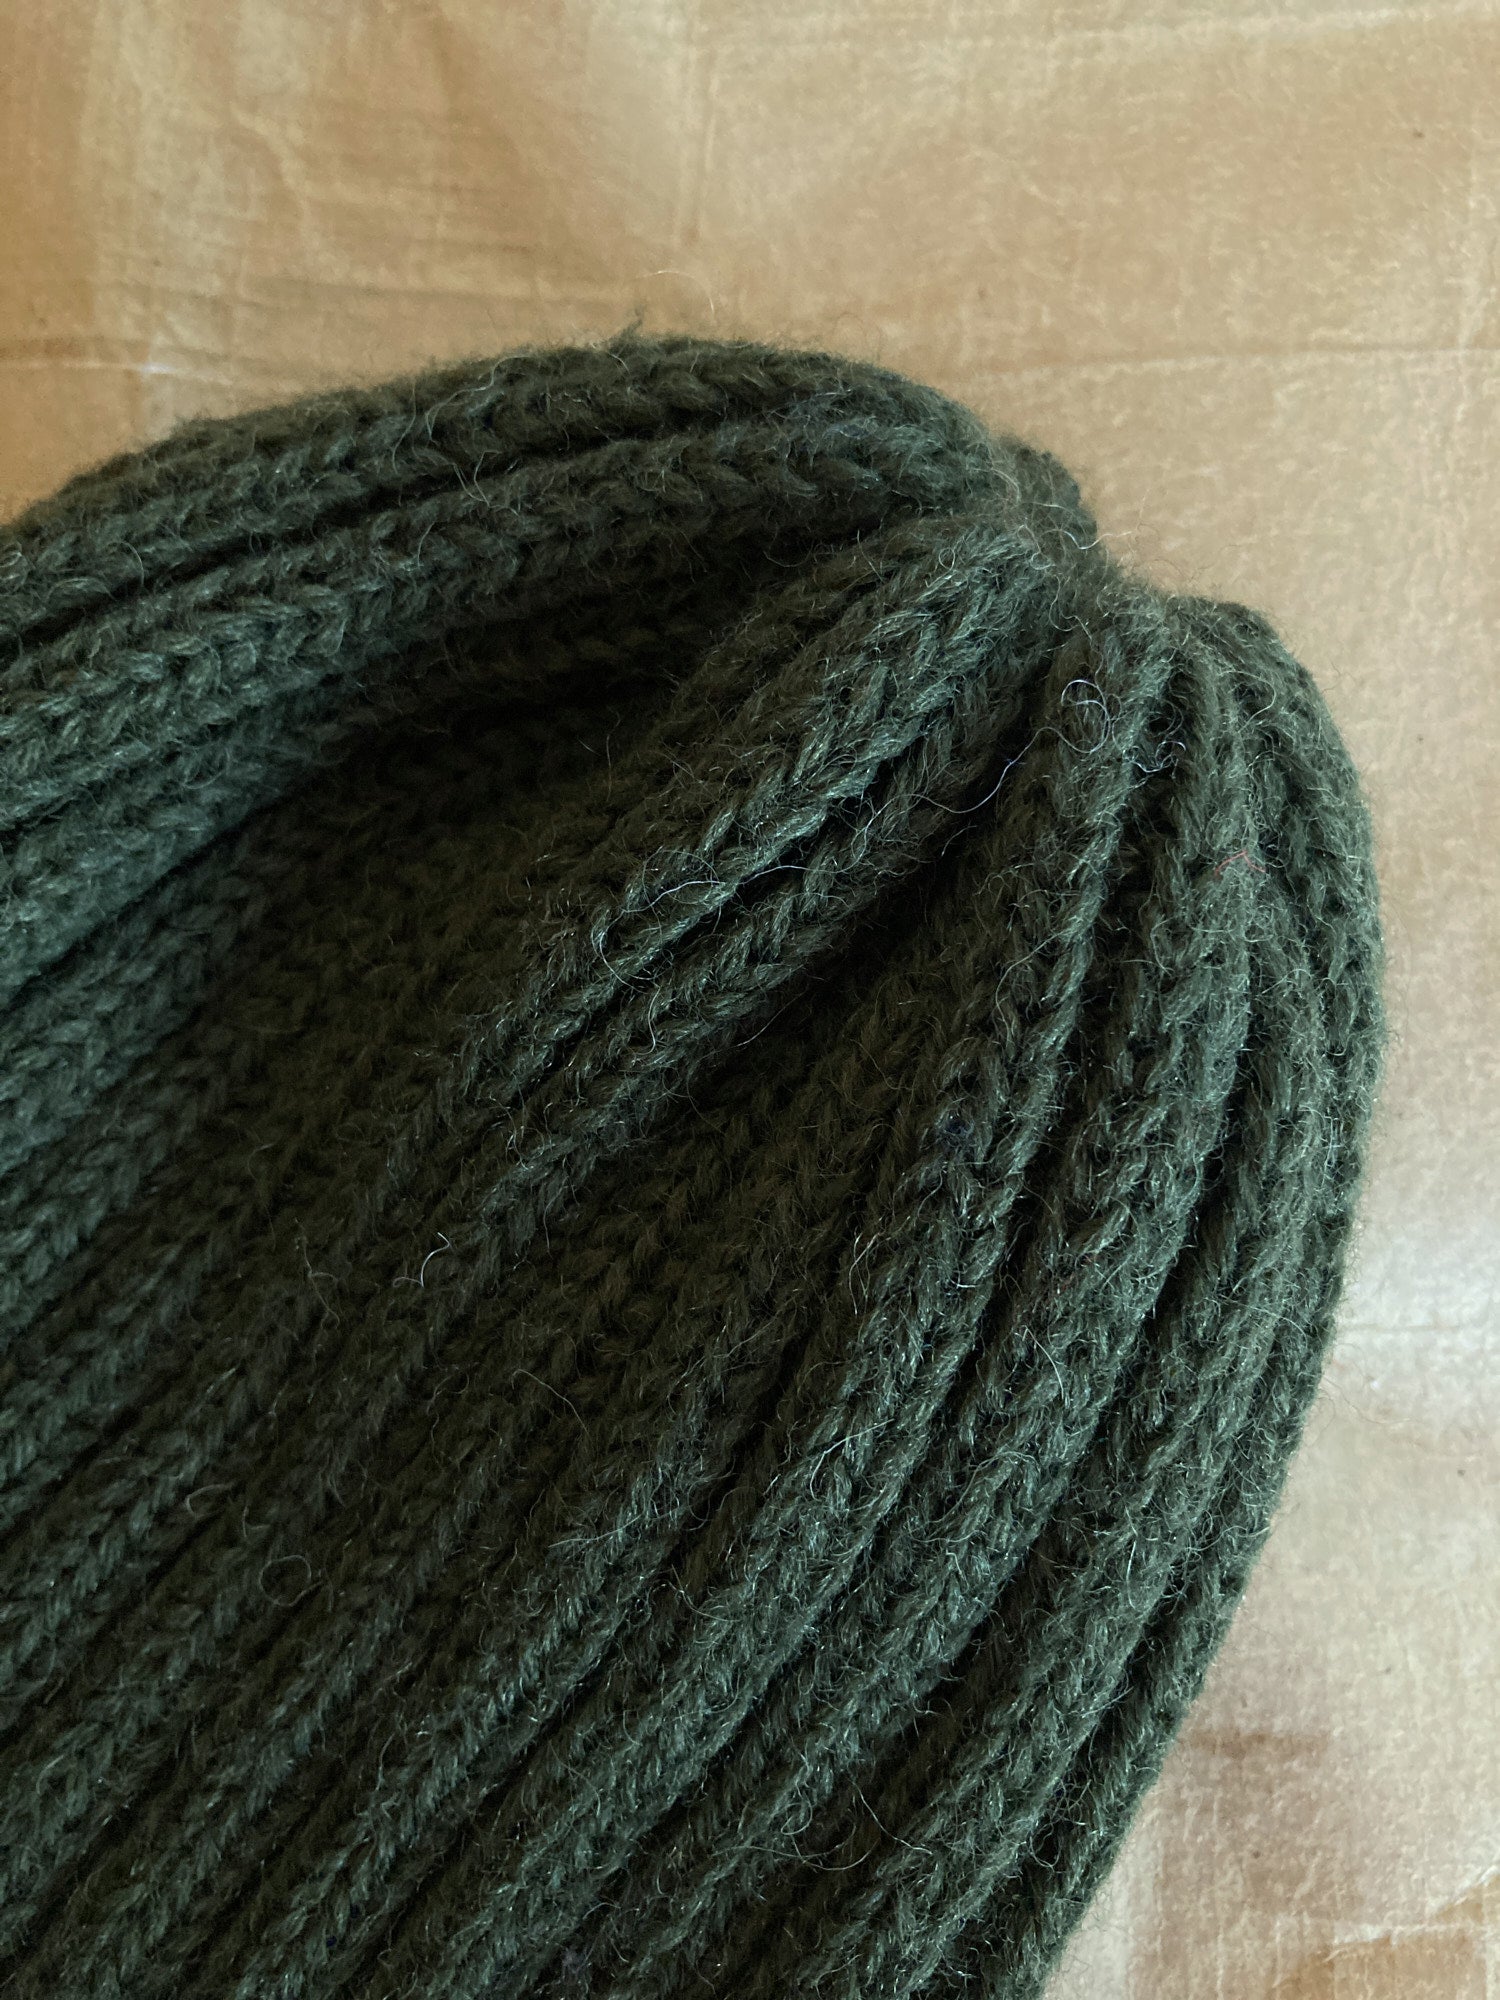 Peter Storm 1985 green W1 proofed wool rib knit waterproof beanie